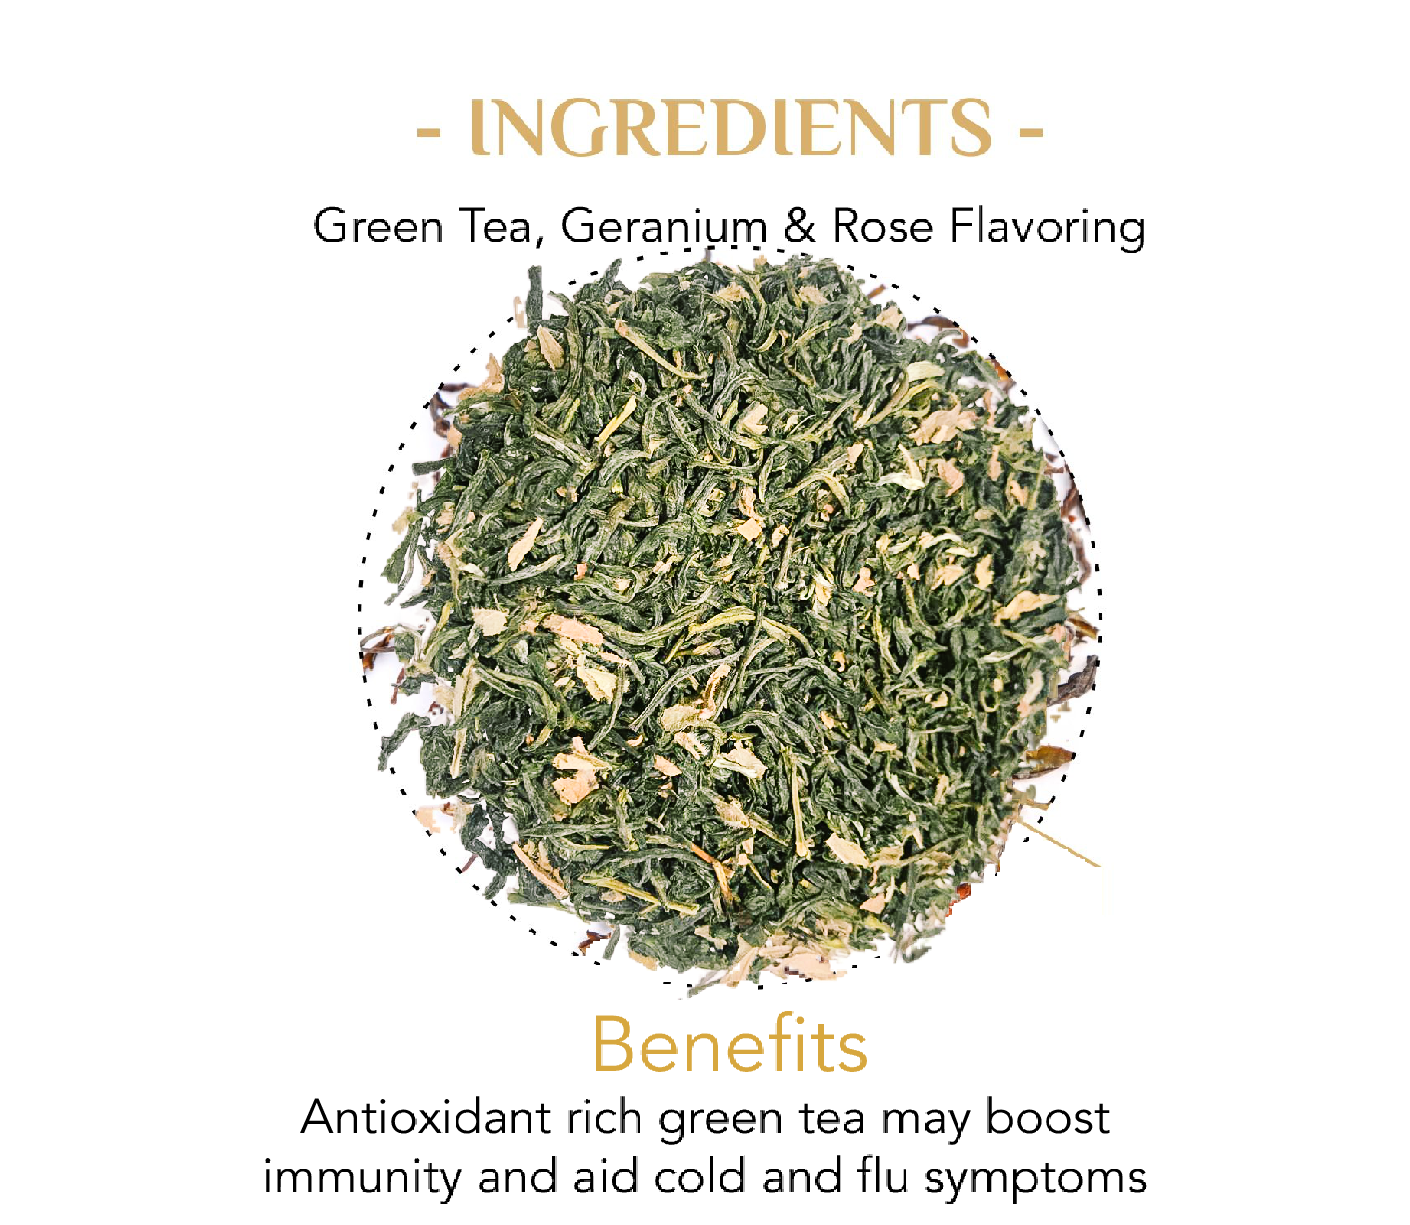 The Kettlery Geranium Rose Green Tea, Loose Leaf Green Tea Tin, 65 g